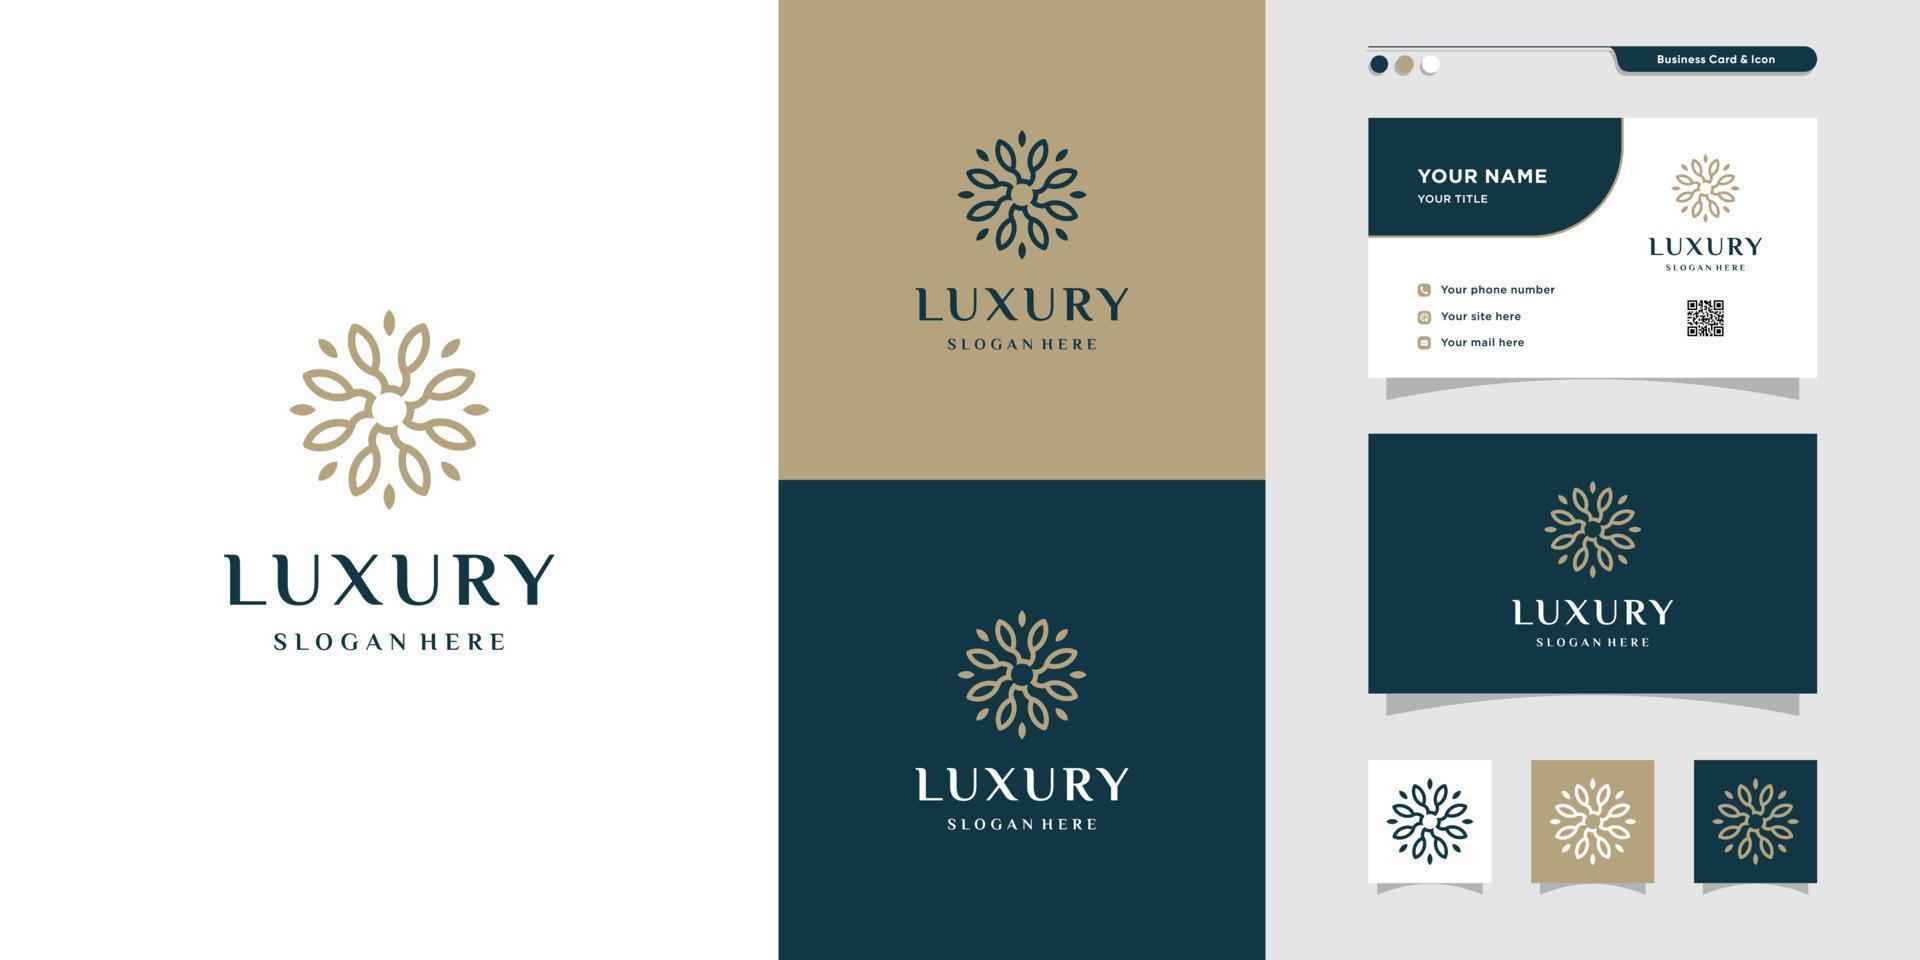 Luxury floral logo and business card design. Beauty, fashion, salon Premium Vector